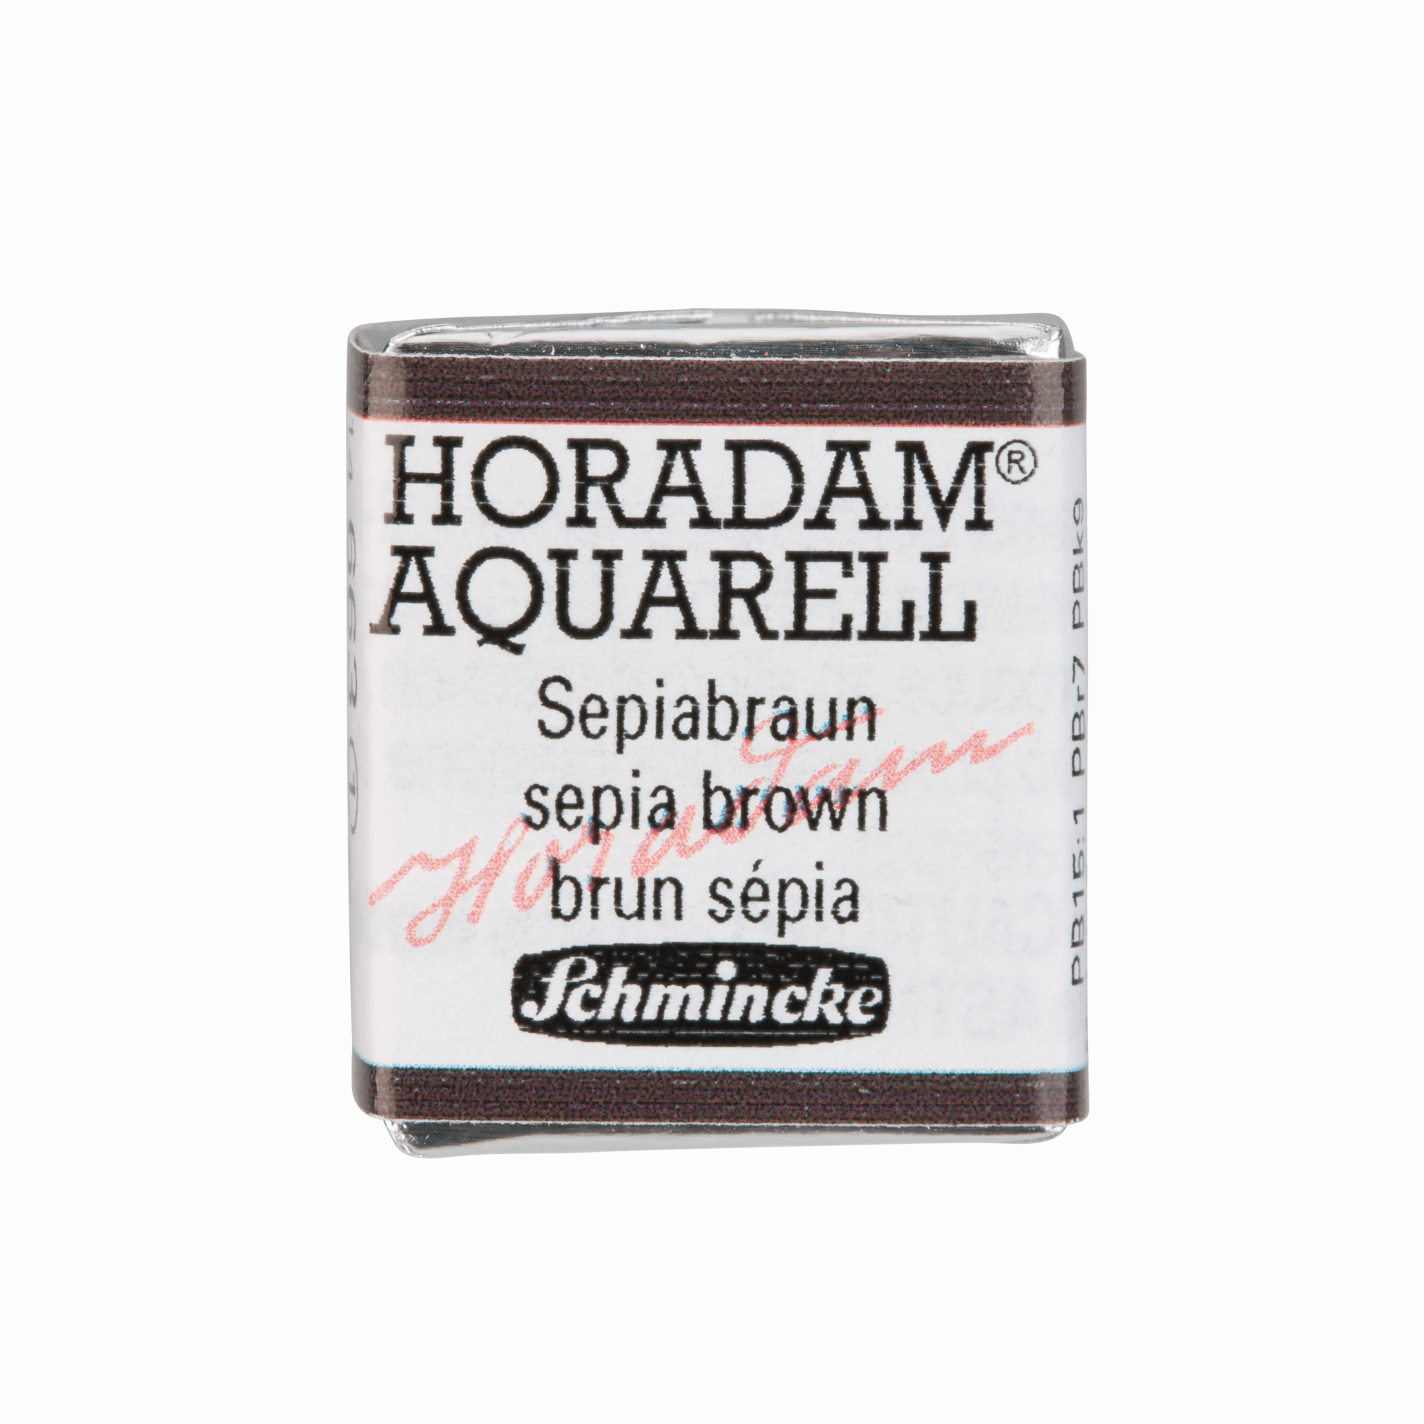 Schmincke Horadam Aquarell pans 1/2 pan Sepia Brown